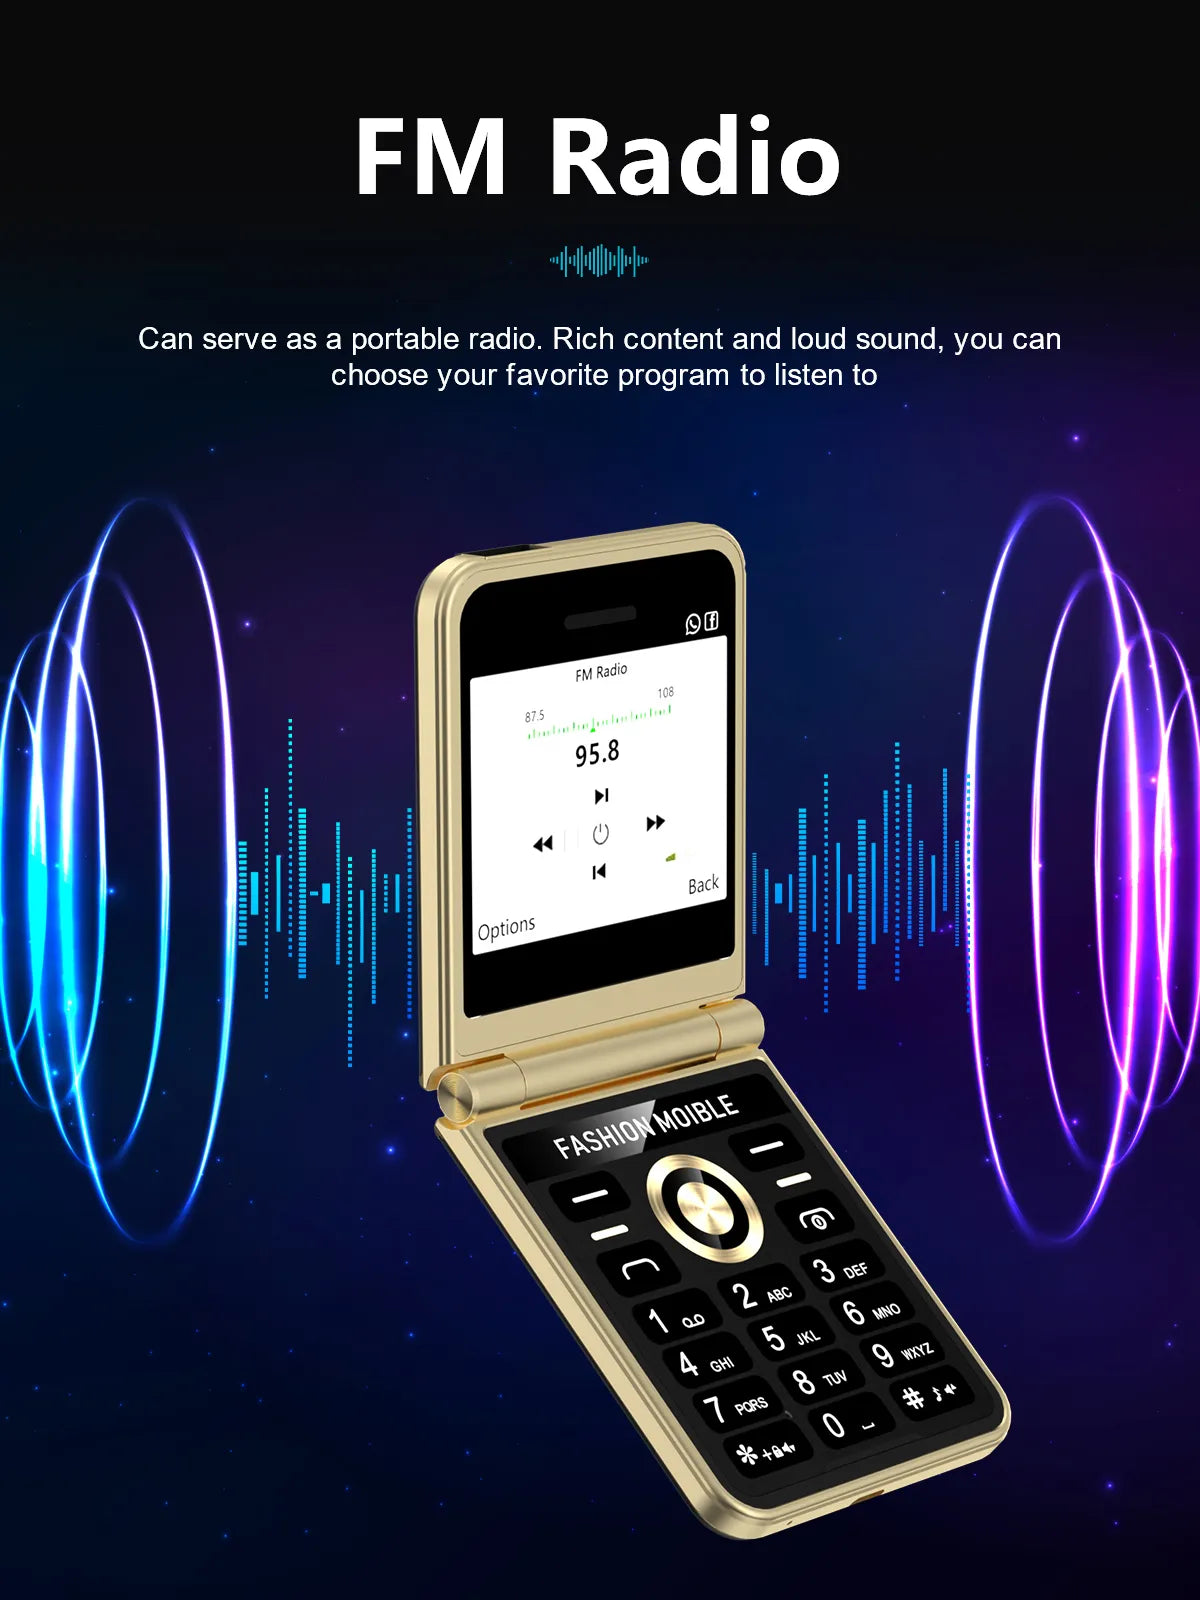 Compact Flip Phone 2.4" Screen 4 SIM Magic Voice & LED Flashlight